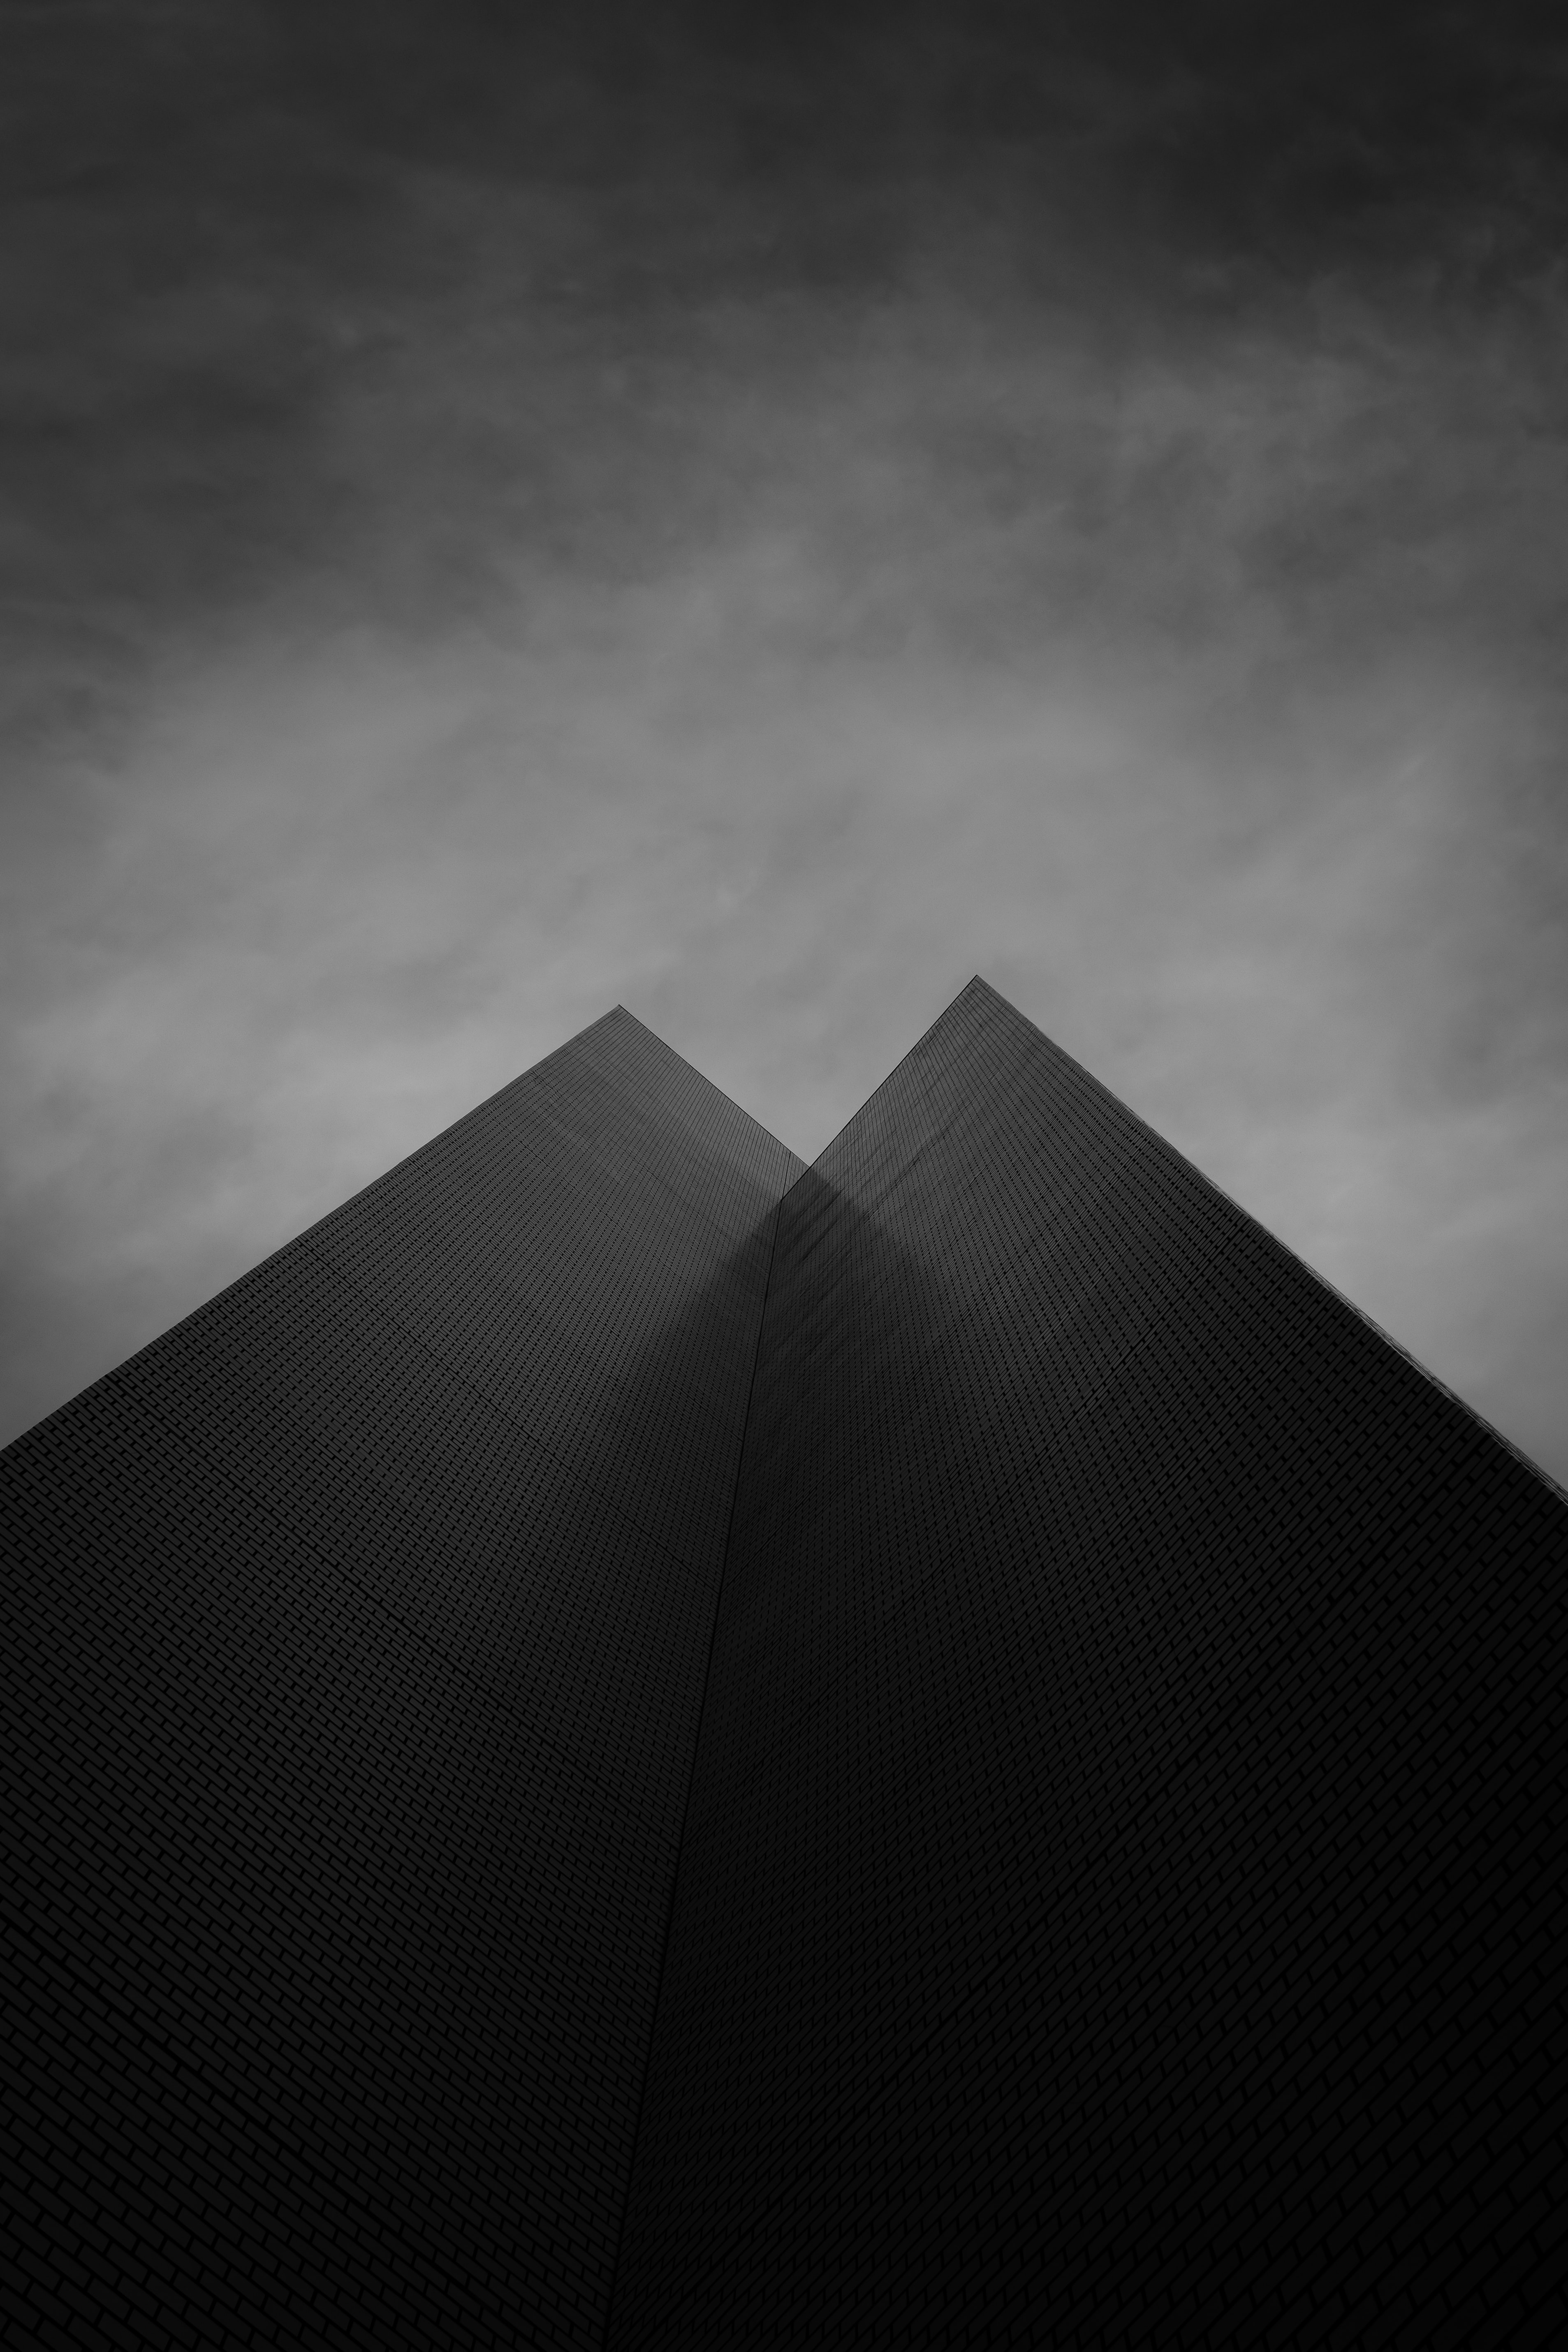 bw, bottom view, sky, black, building, chb, facade